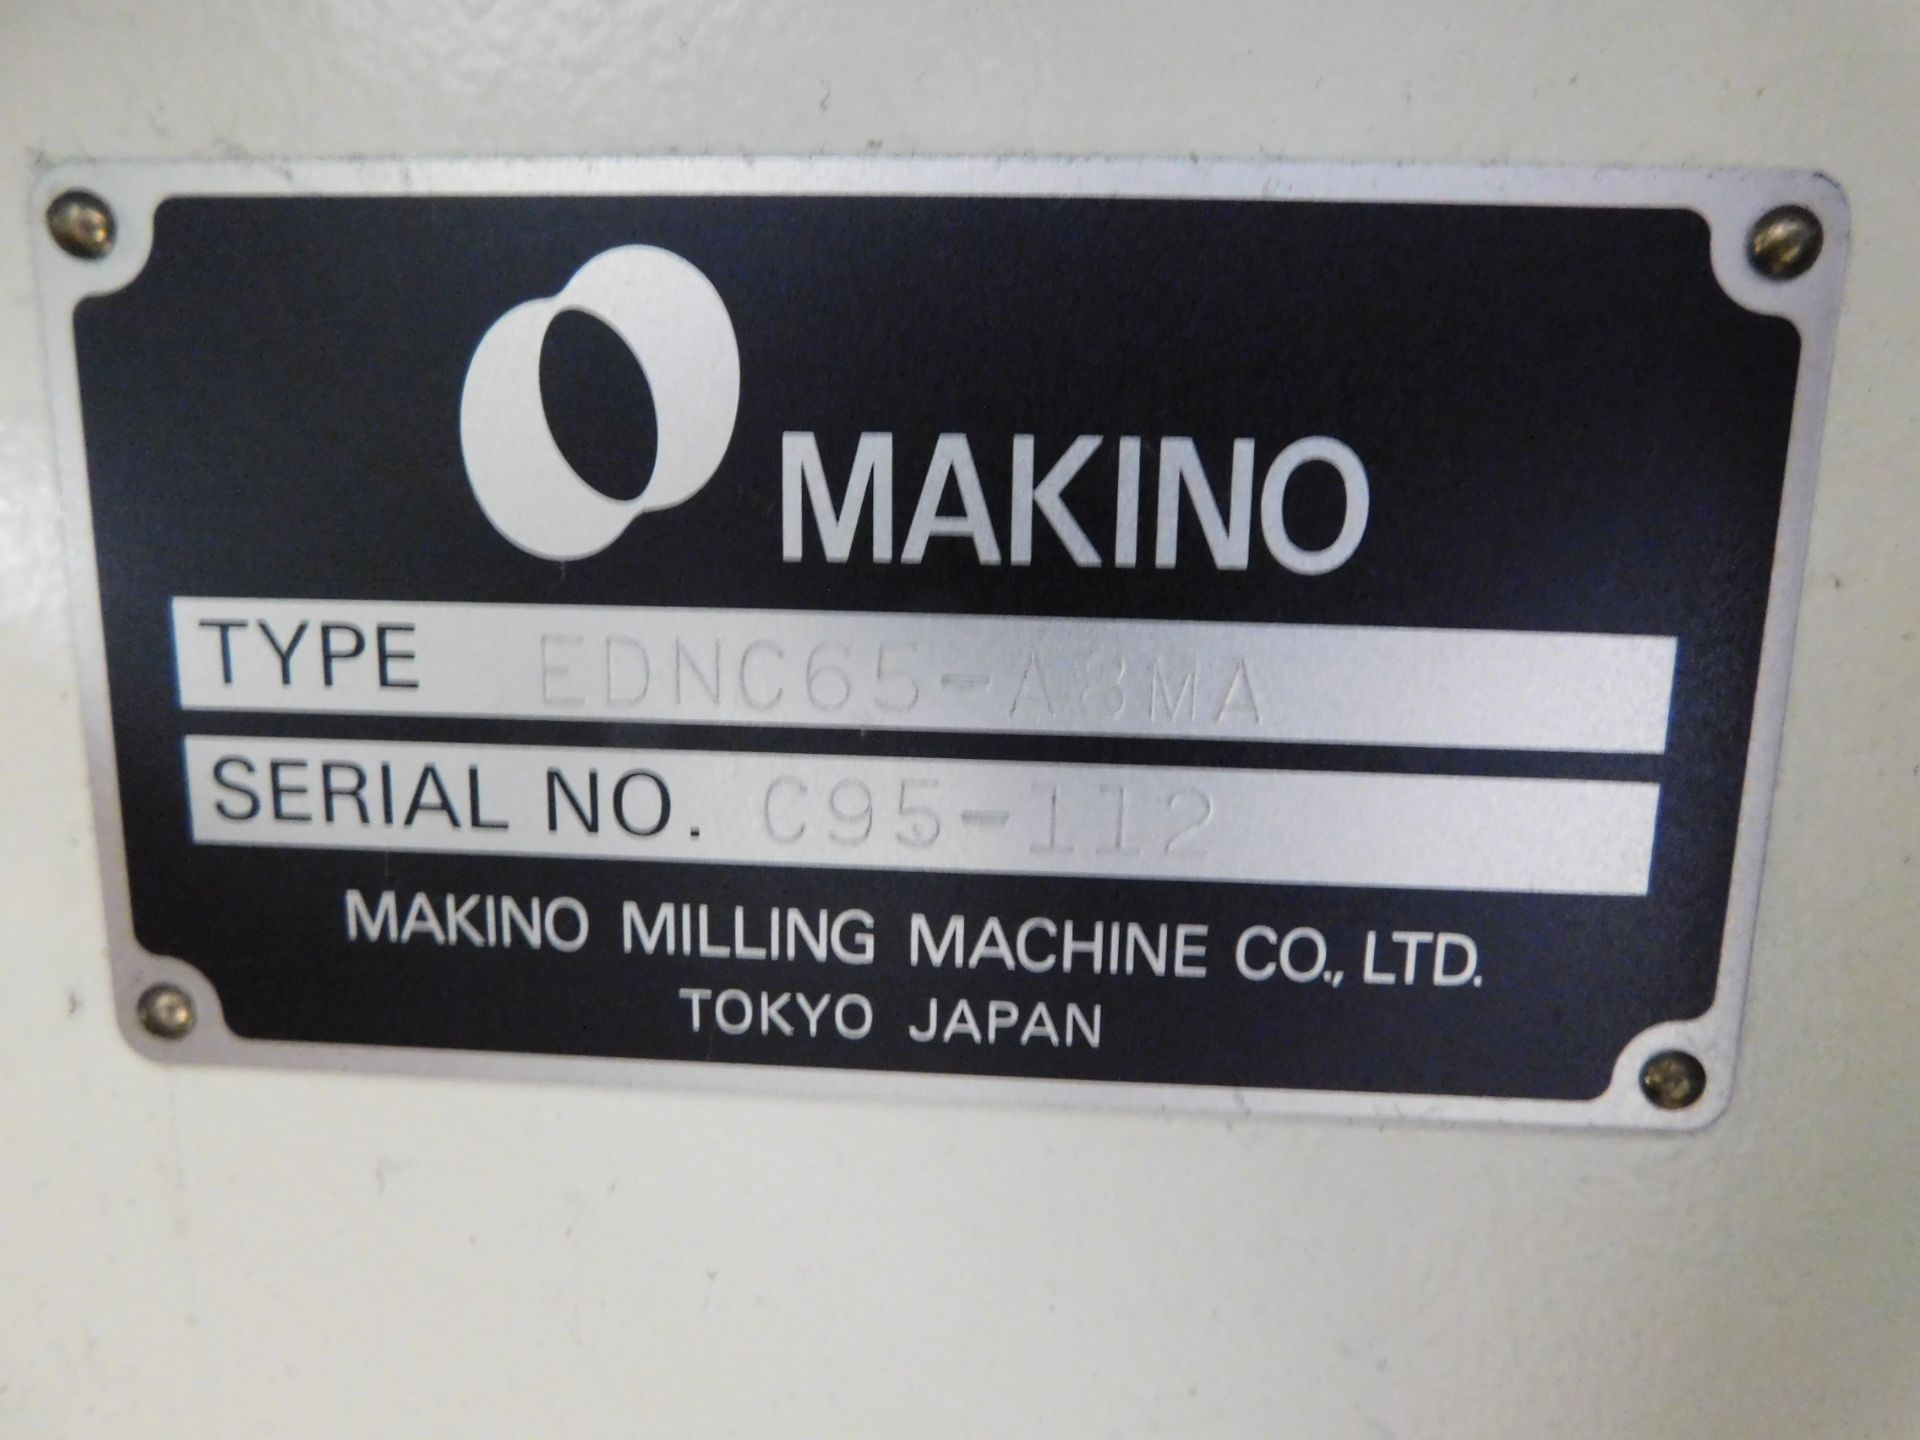 Makino Model EDNC65-ASNA Sinker EDM sn#C95-112, System 3R Tool Head, 8-Position Tool Changer, Makino - Image 16 of 18